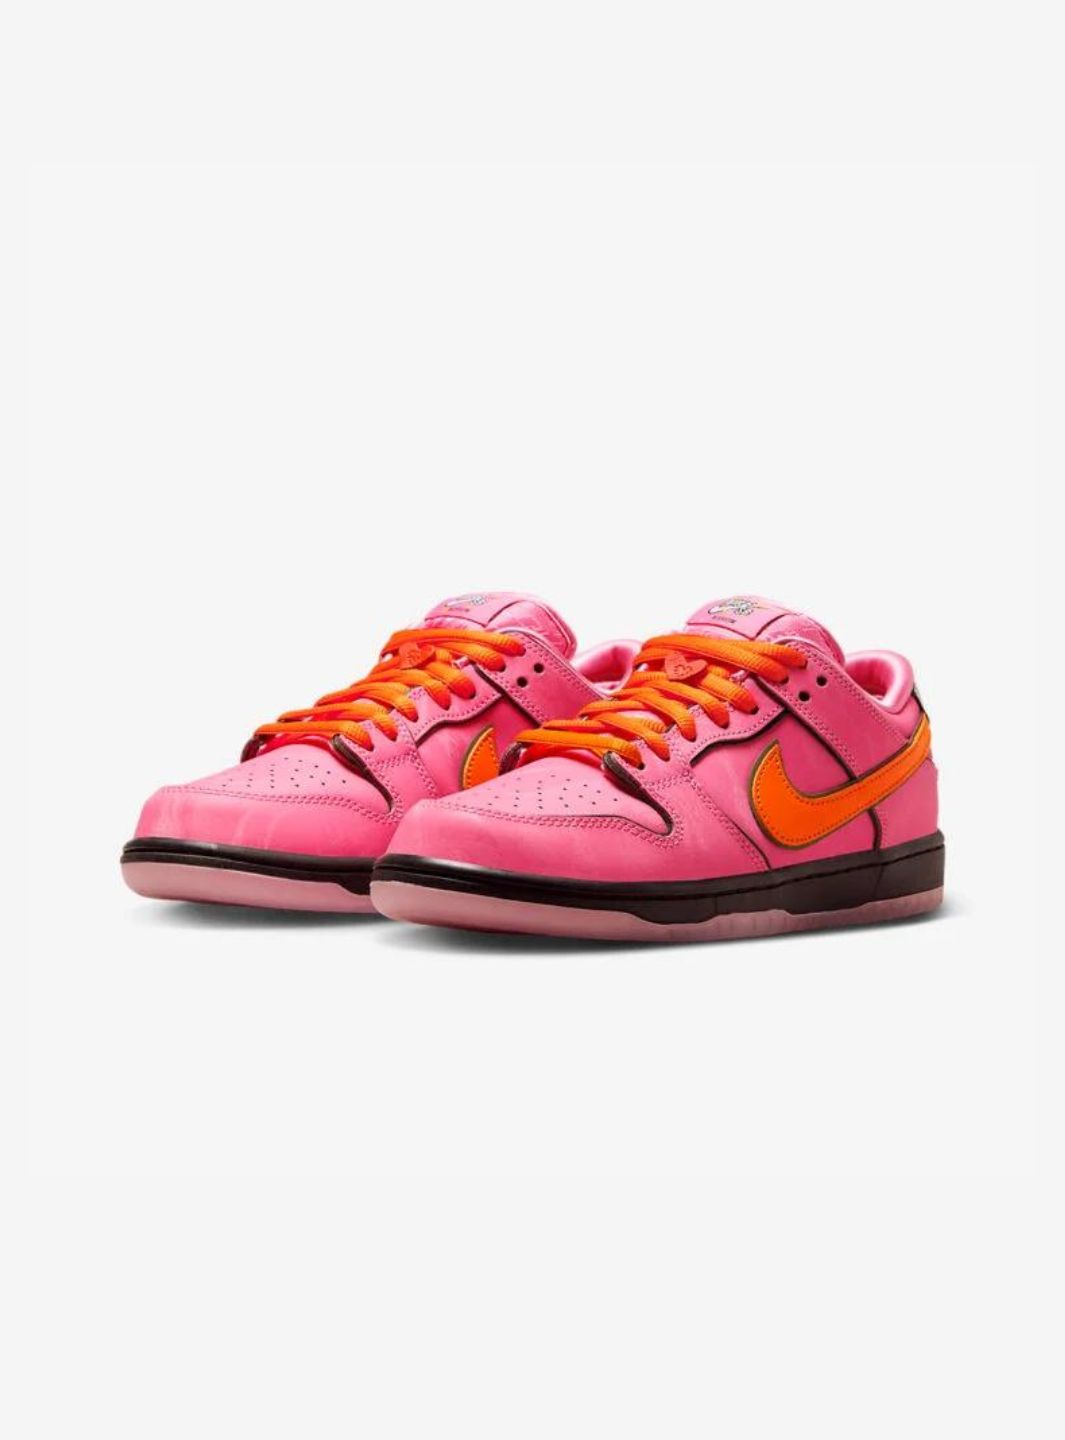 Nike SB Dunk Low The Powerpuff Girls Blossom - FD2631-600 | ResellZone